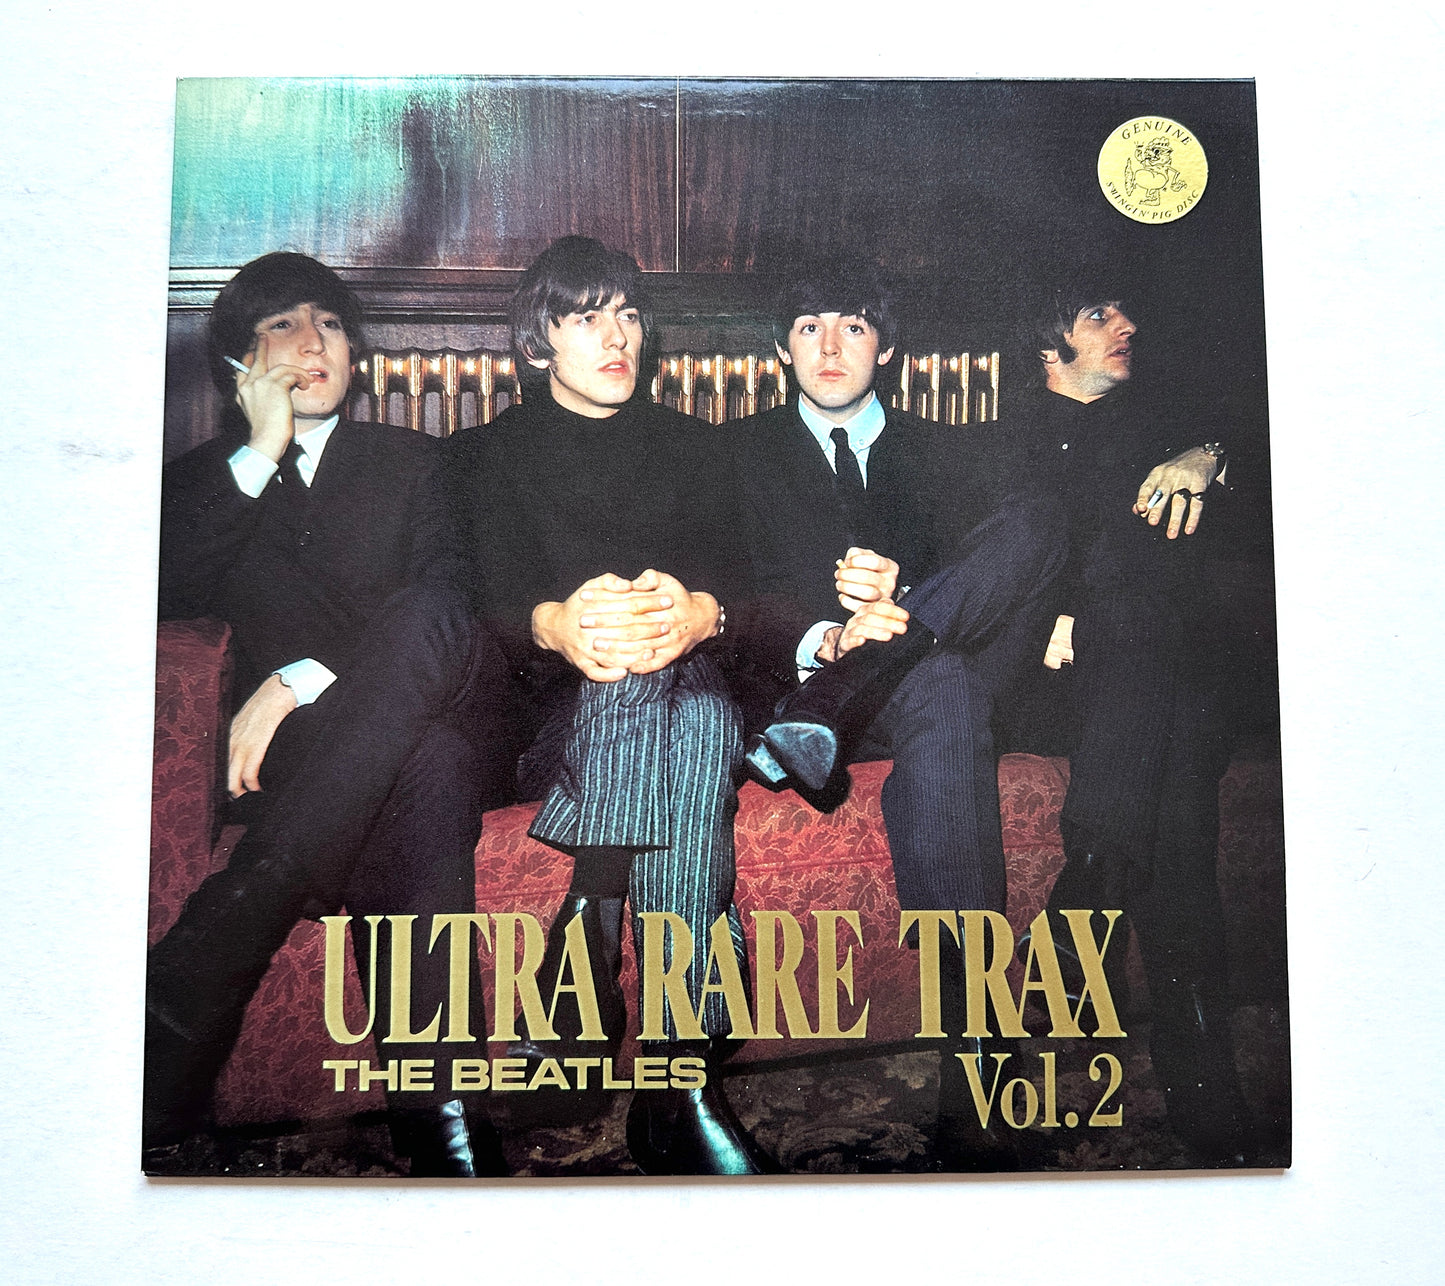 The Beatles - Ultra rare trax vol. 2